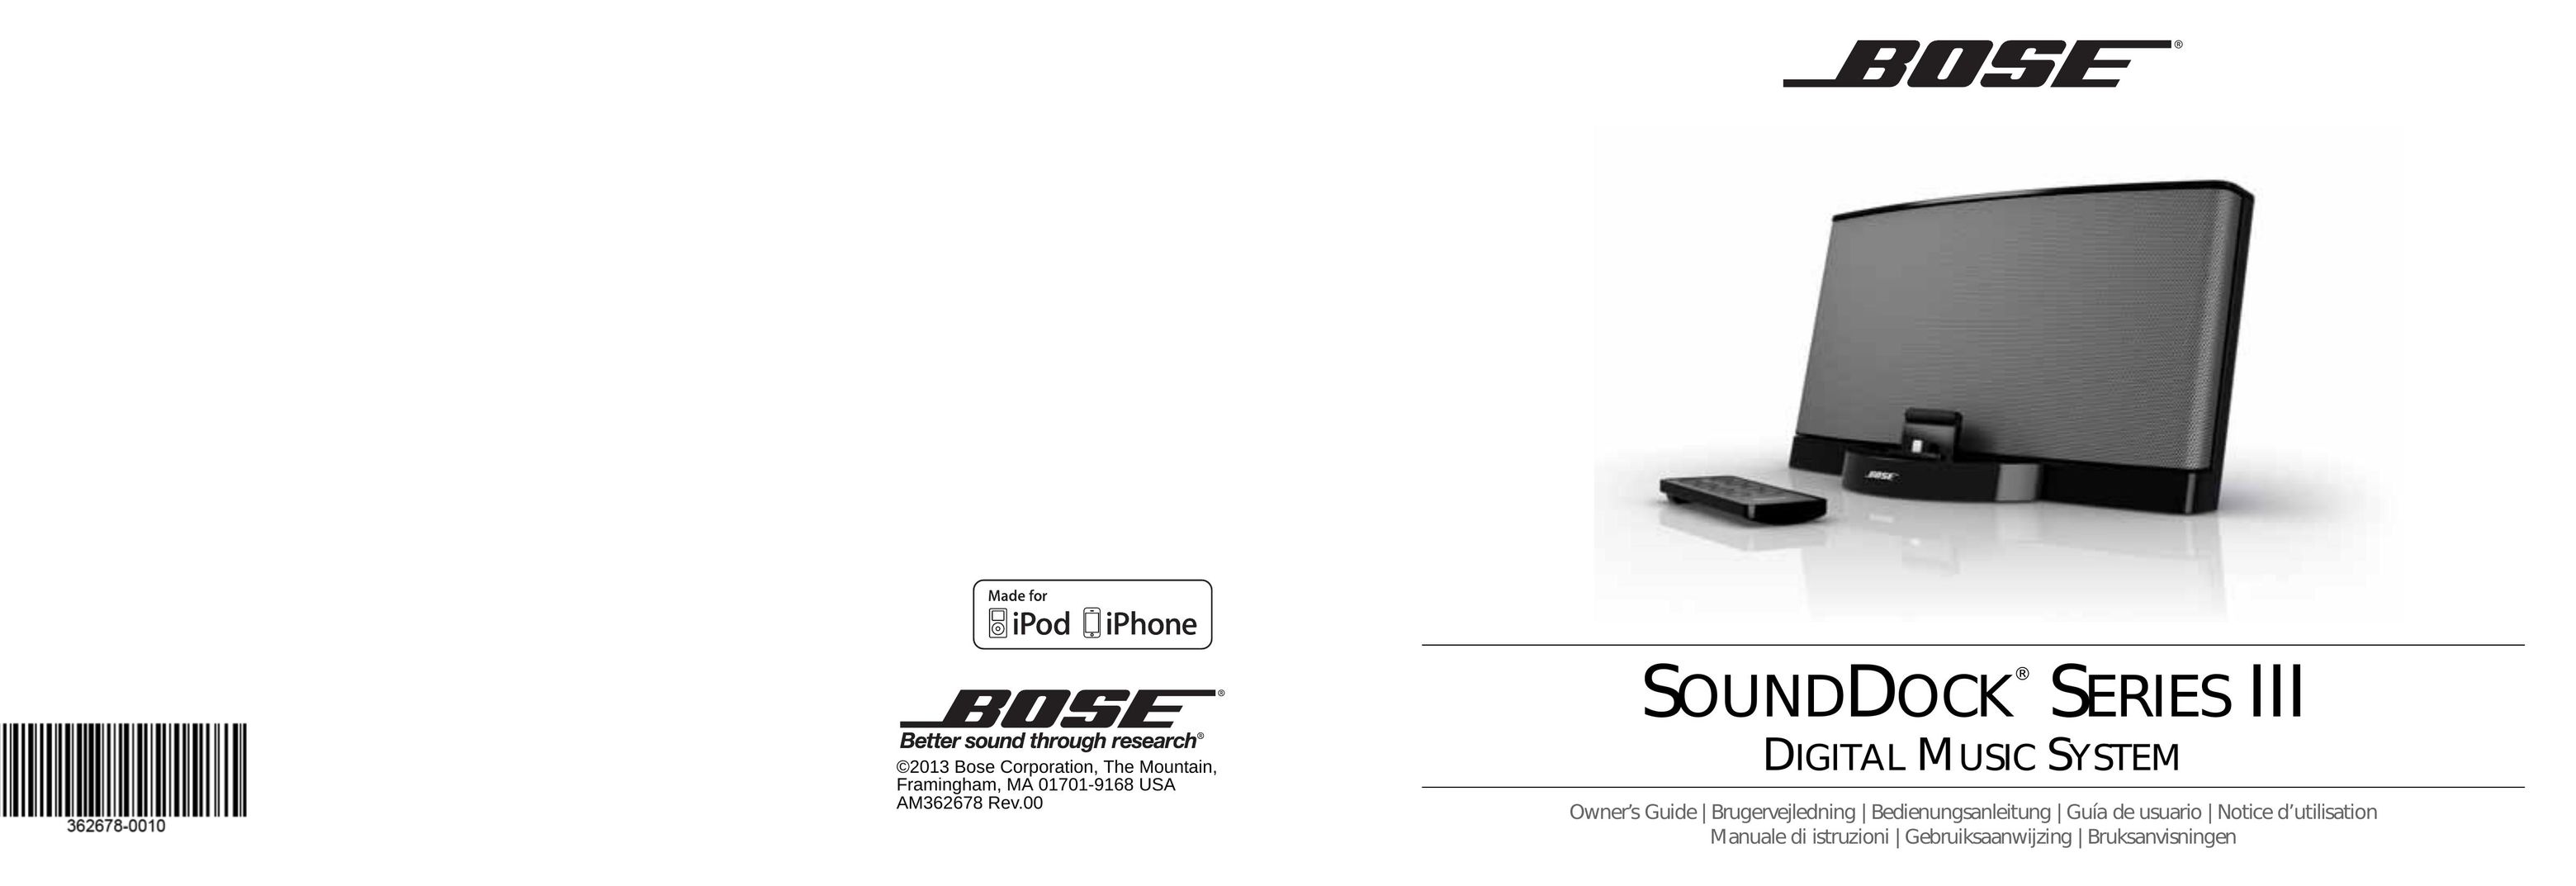 Bose SoundDock Series III MP3 Docking Station User Manual (Page 1)